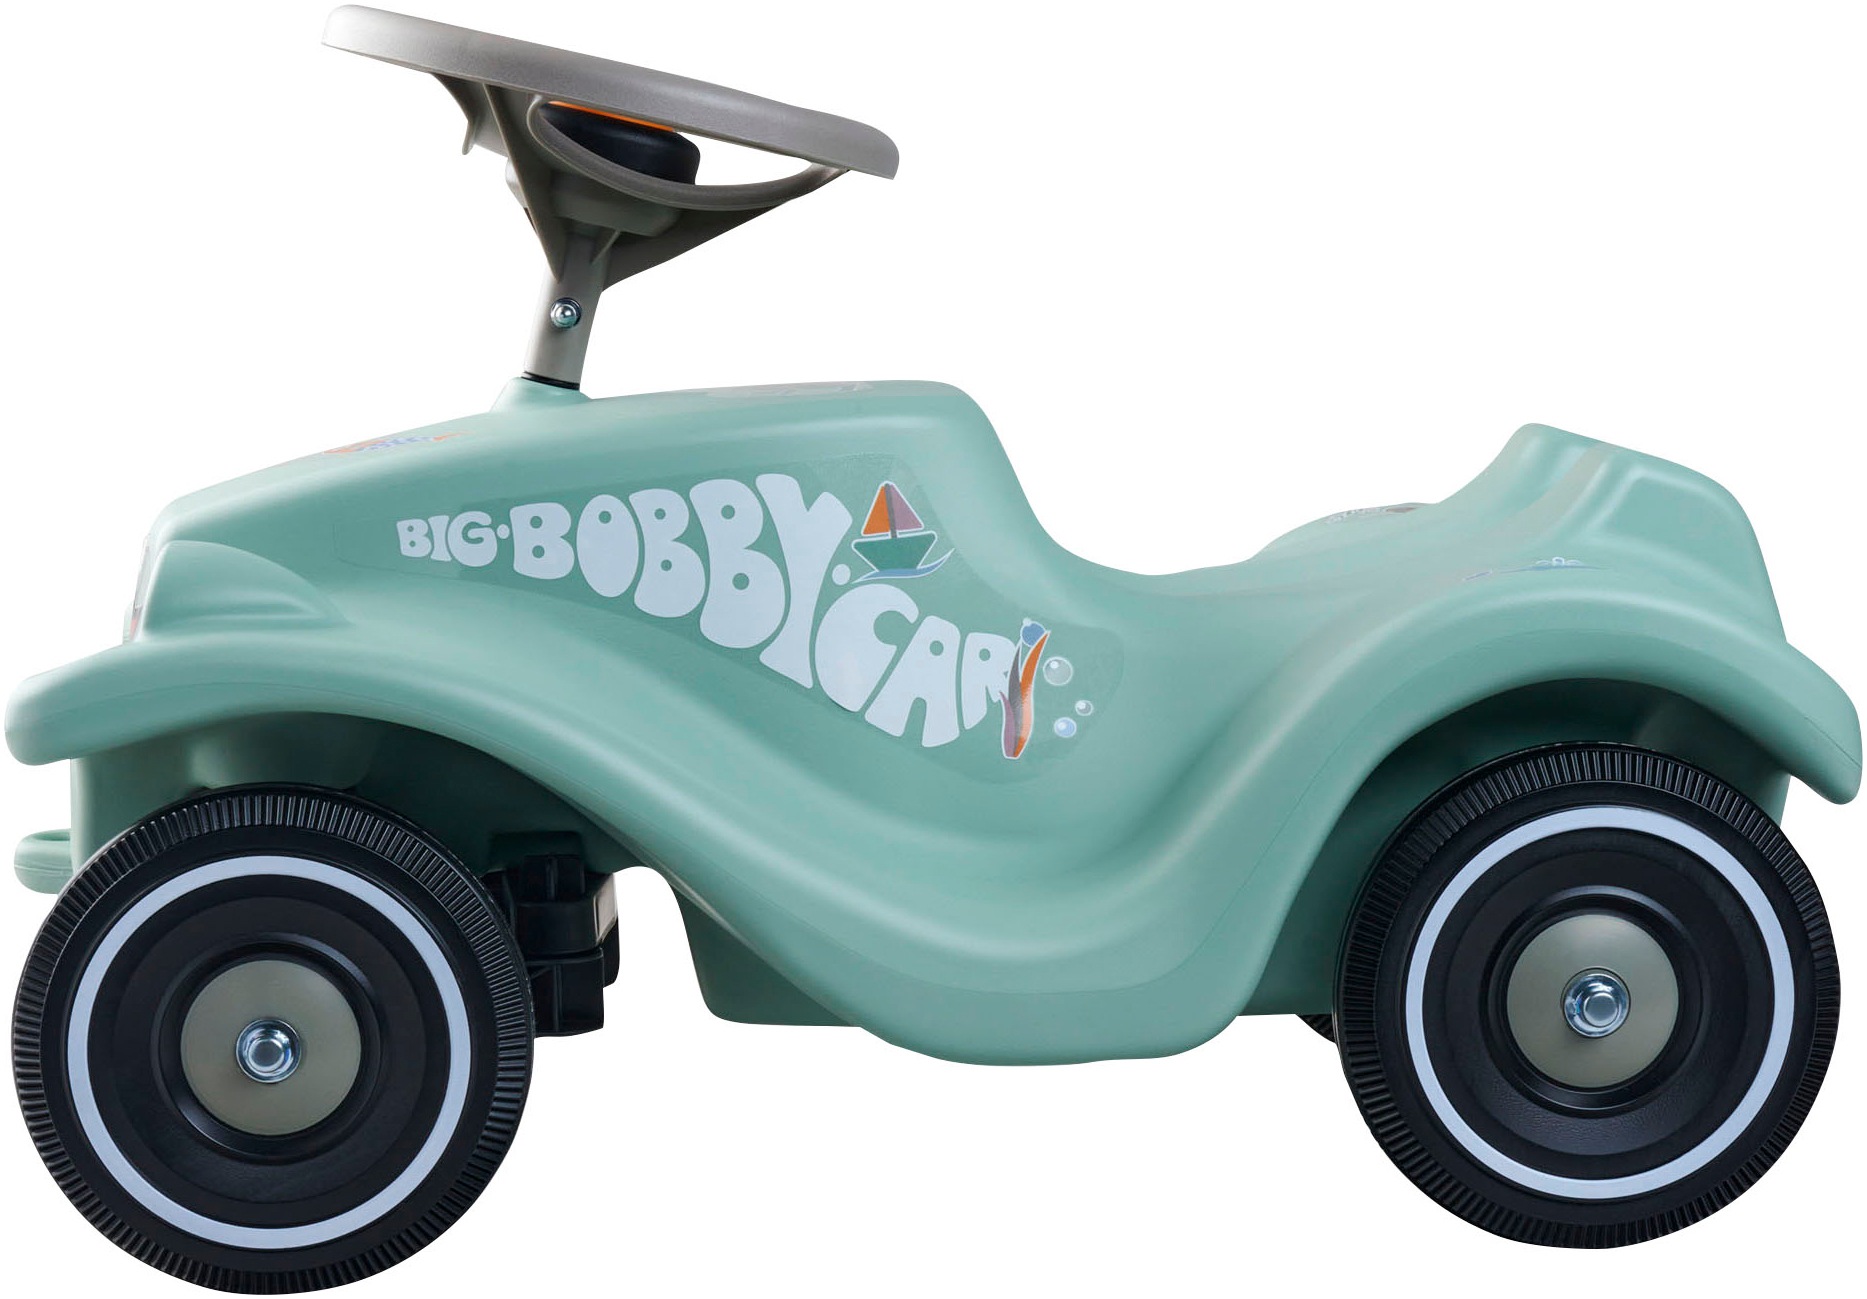 BIG Rutscherauto »BIG Bobby-Car Green Sea«, Made in Germany